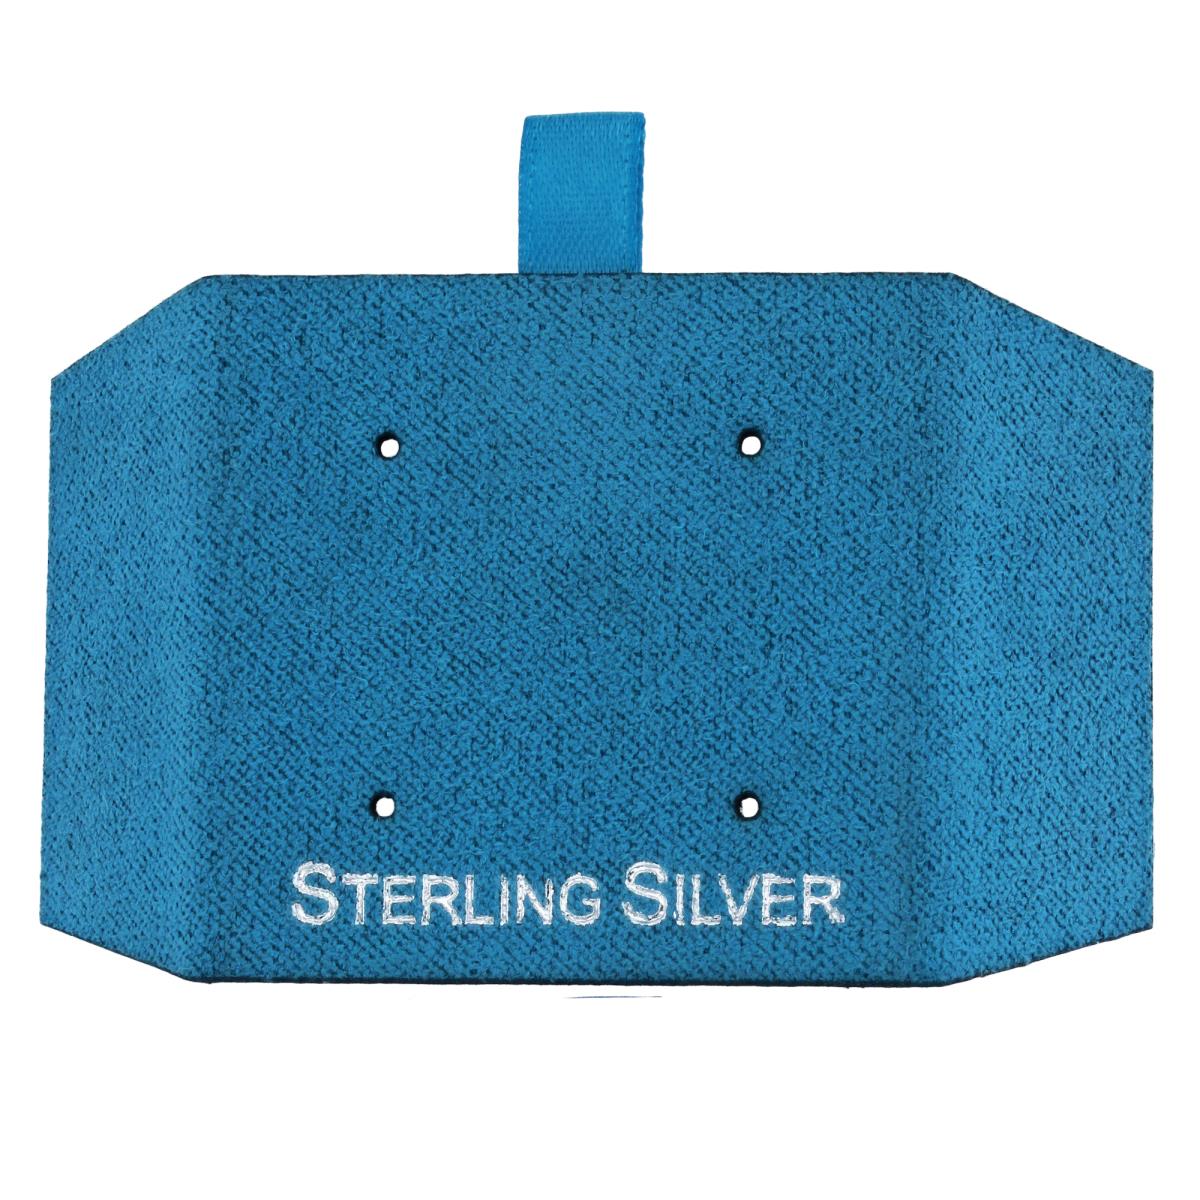 Teal Sterling Silver, Silver Foil 2 Stud Insert (Box B06-159/Teal/D)